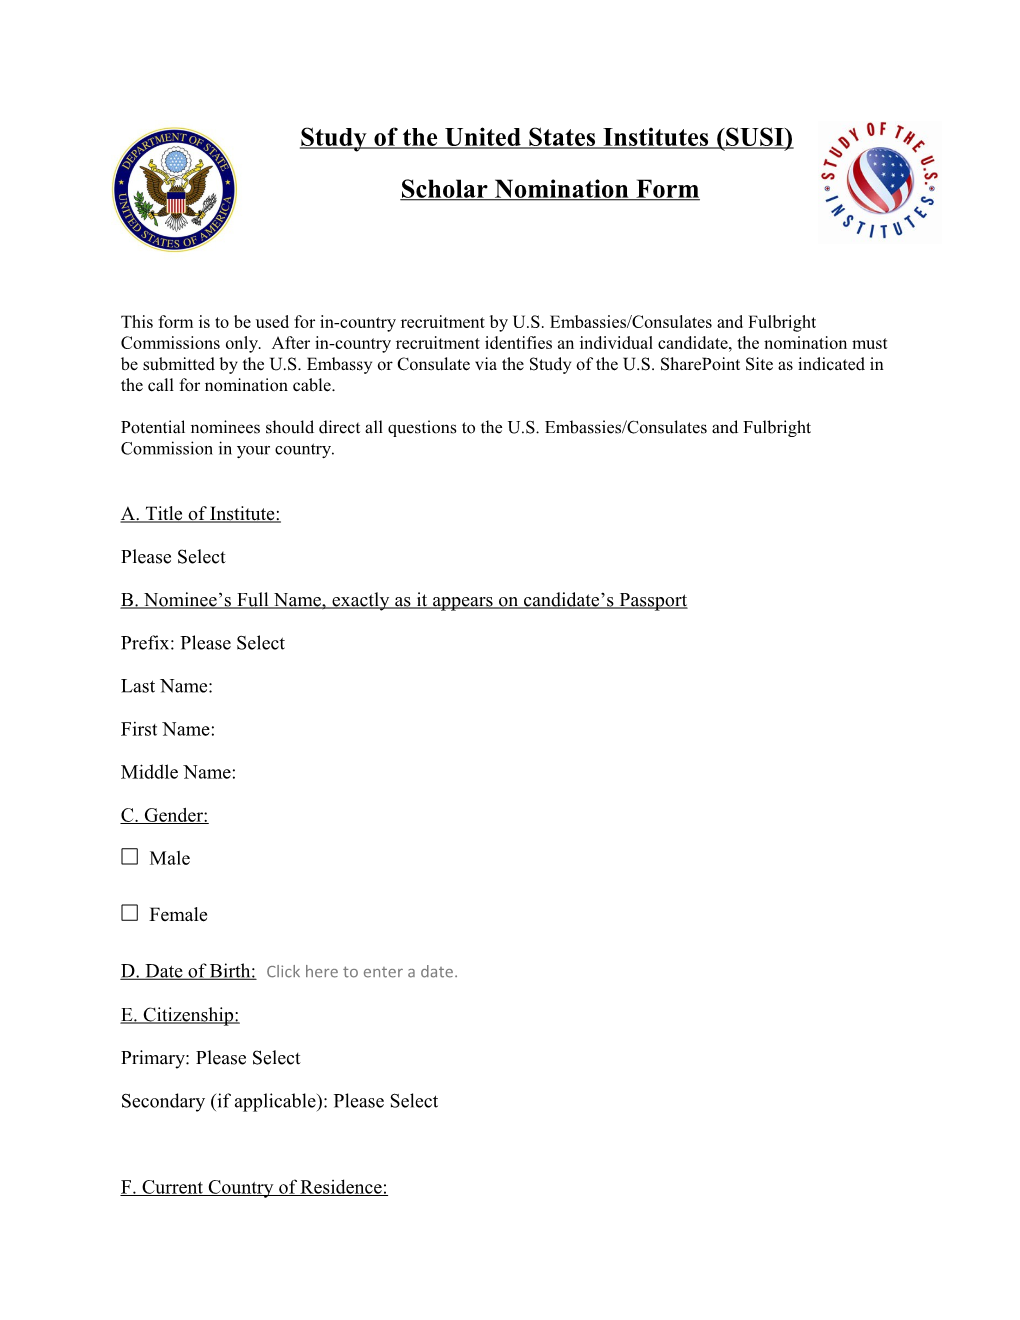 Scholar Nomination Form